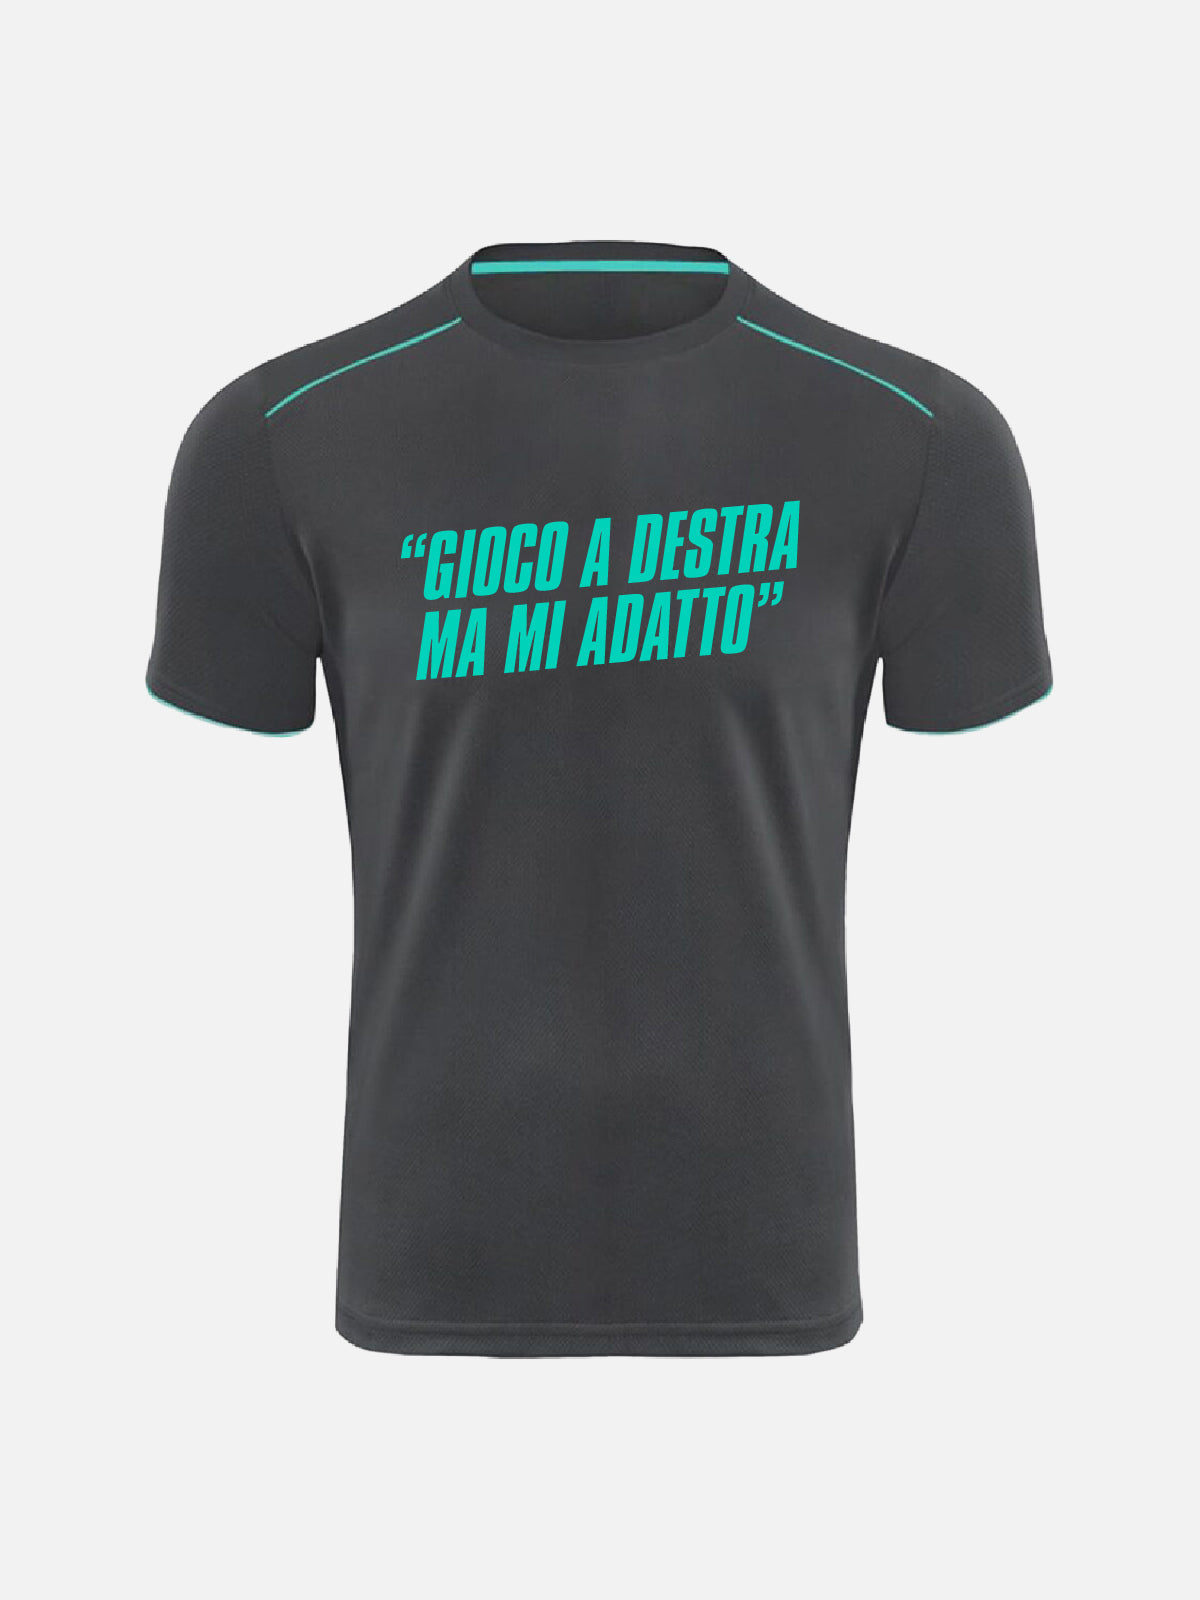 T-shirt -"I Play Right But I Adapt"